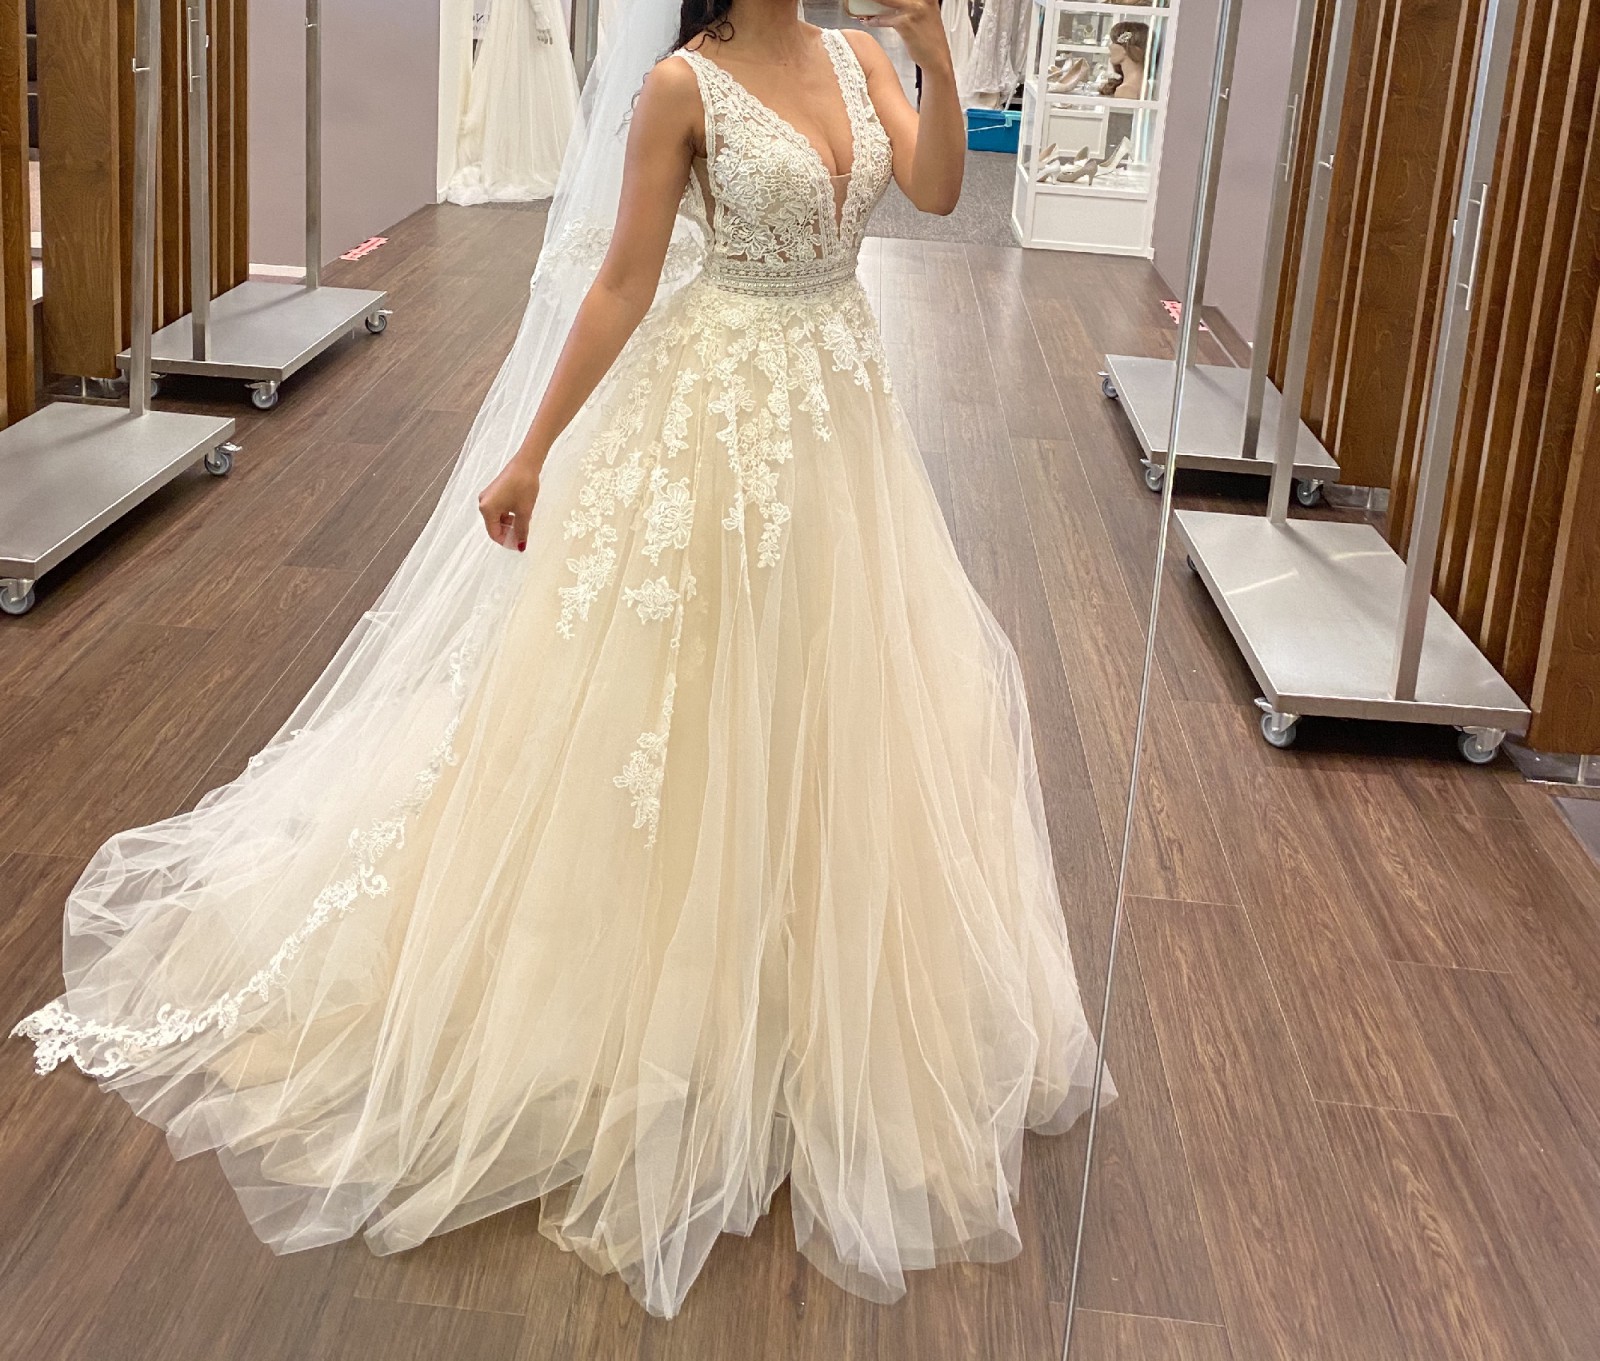 Enzoani Lavender New Wedding Dress Save 53% - Stillwhite